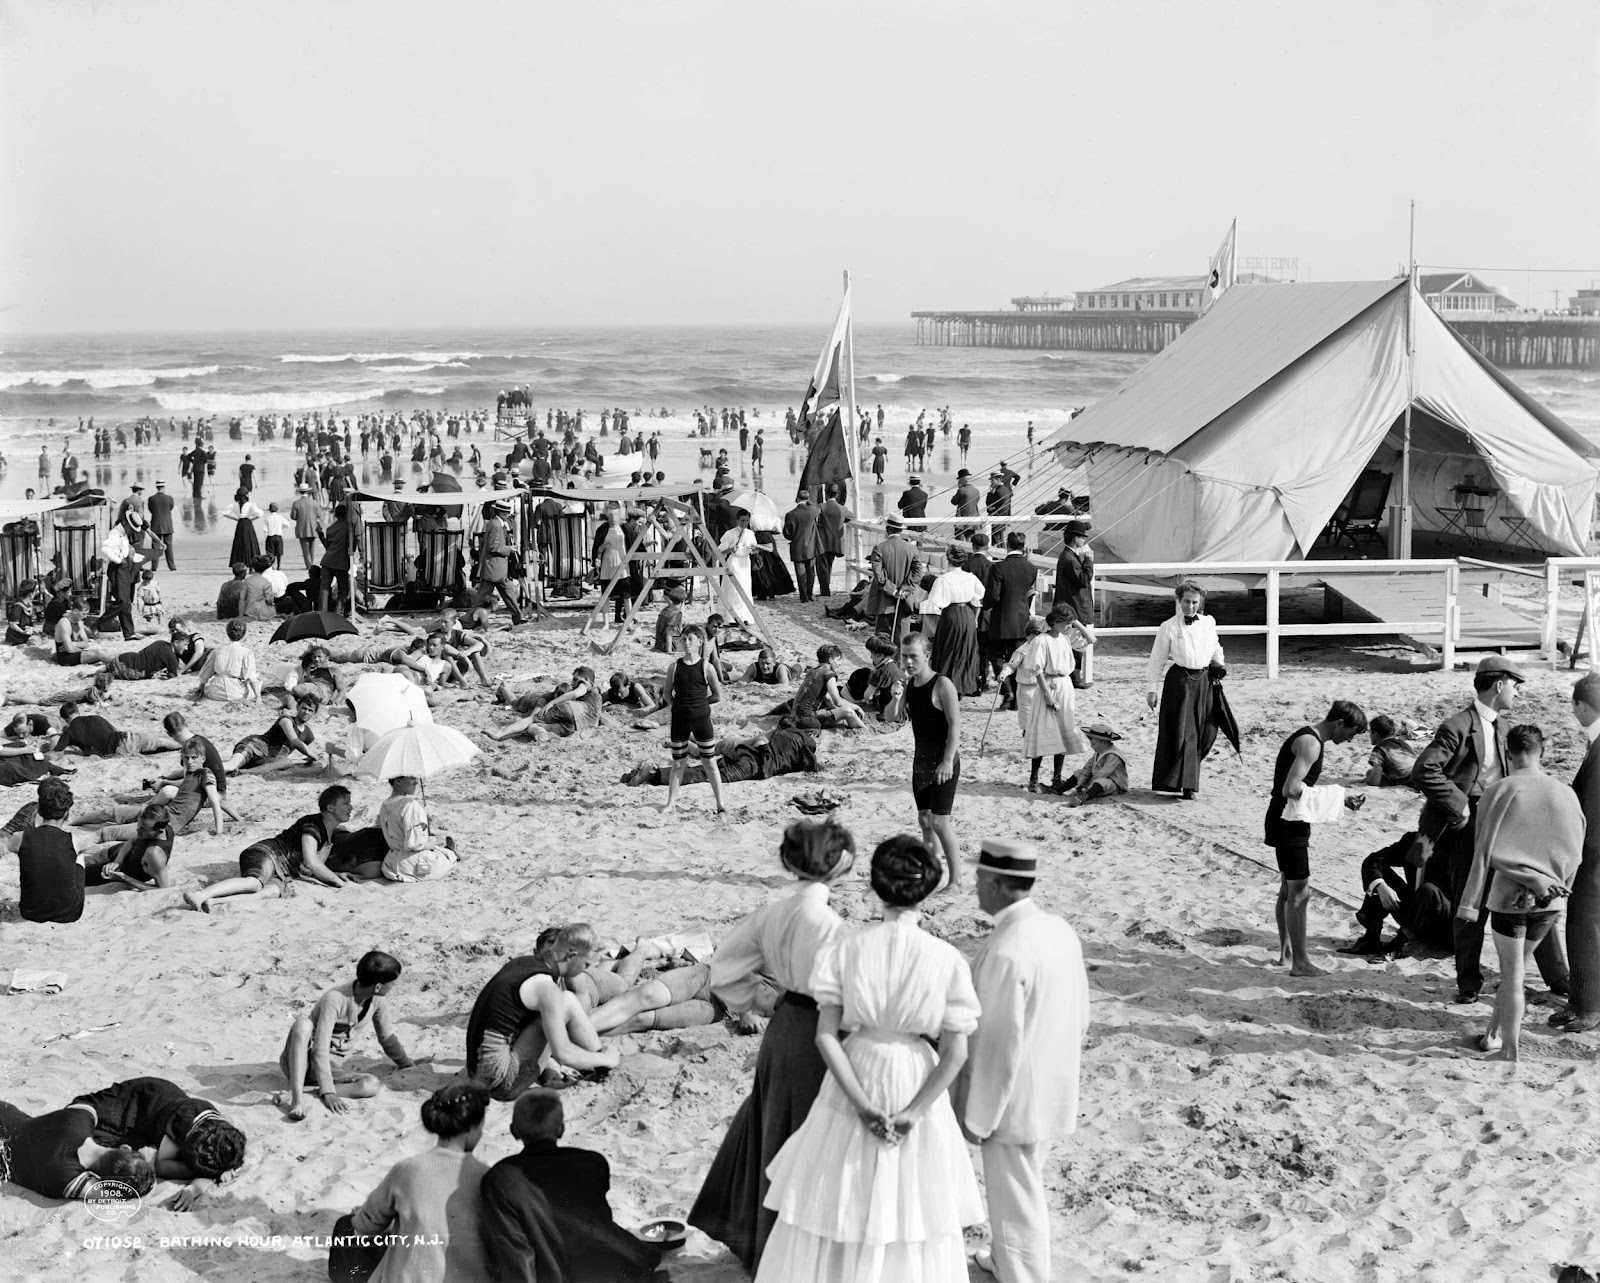 The Jersey Shore circa 1910. Atlantic City bathers. I 